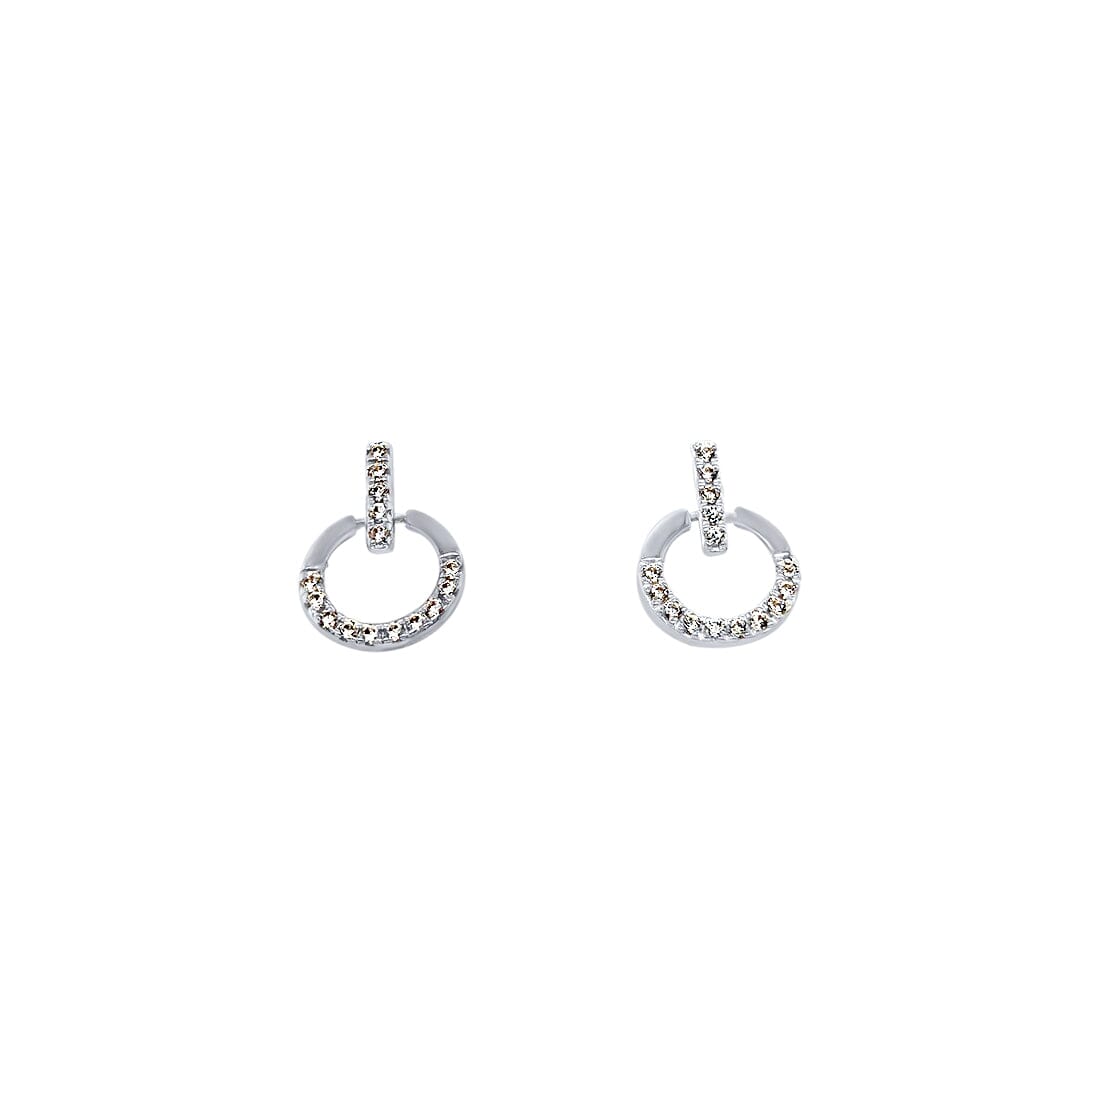 Open Circle Stud Earrings with Cubic Zirconia in Sterling Silver Earrings Bevilles 